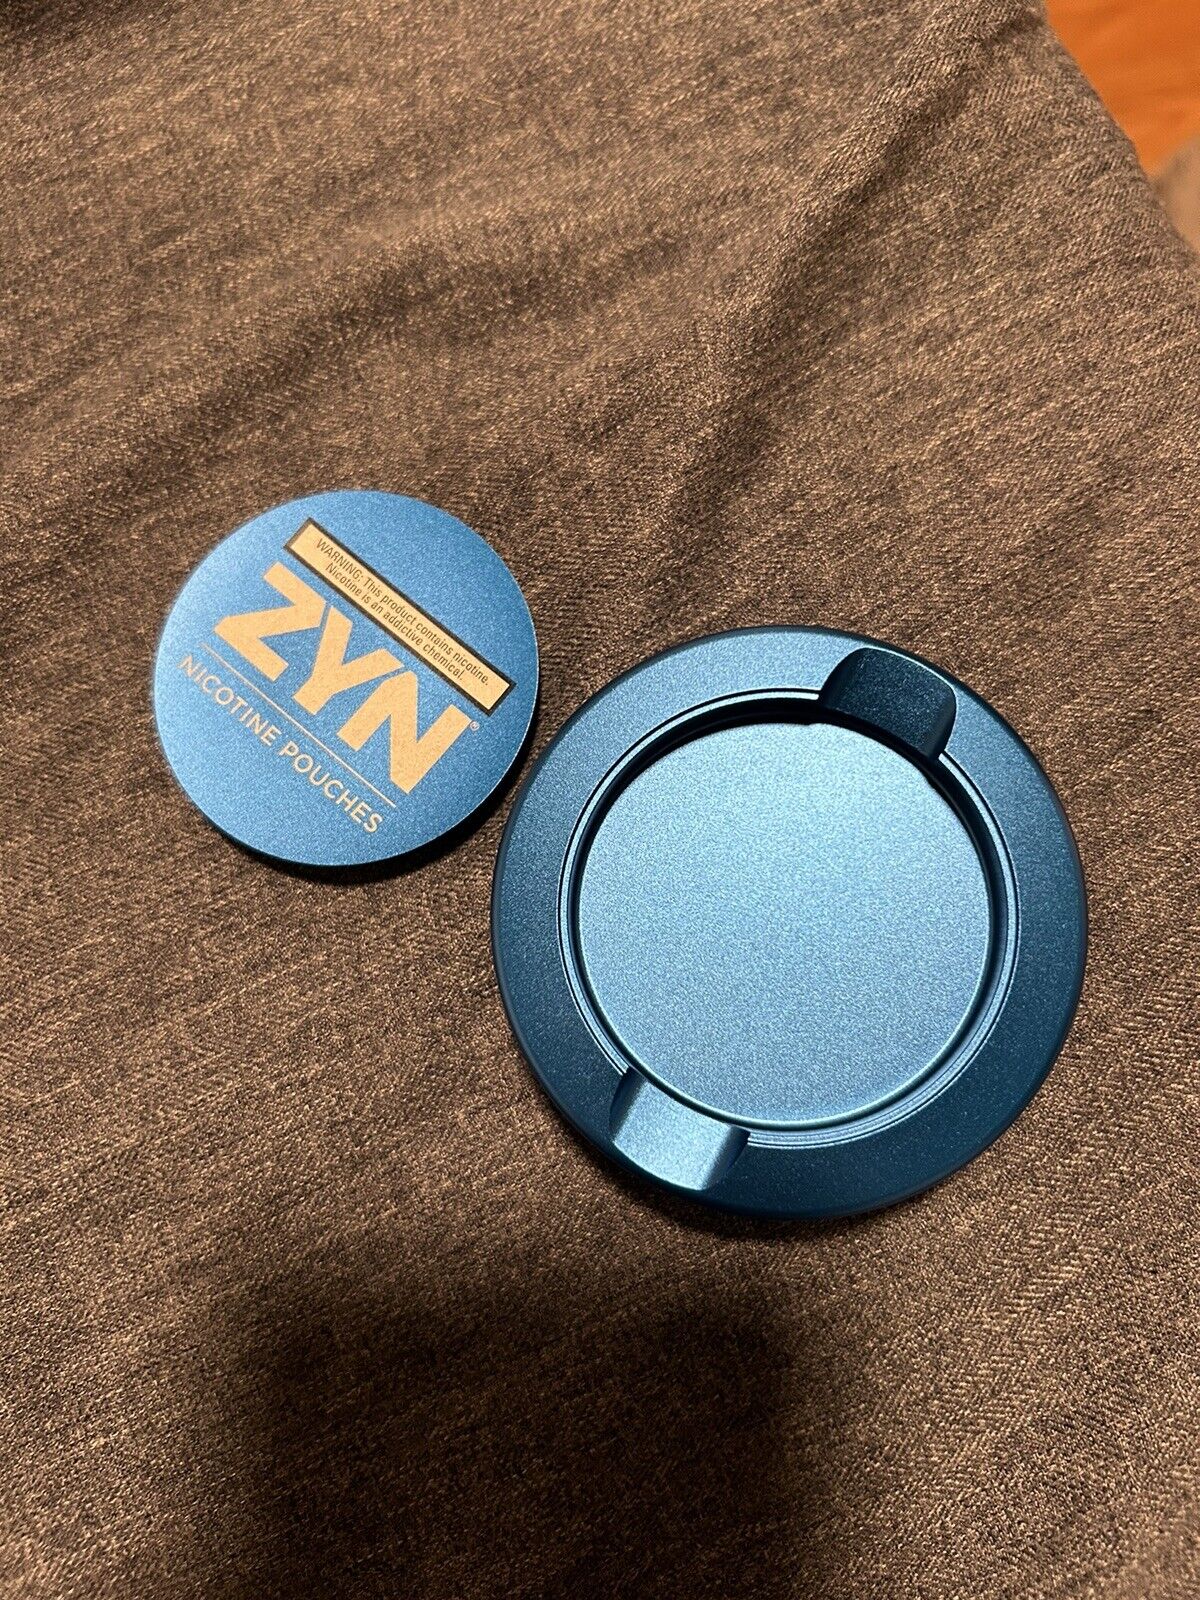 Zyn Premium Metal Can - BLUE - BRAND NEW - Zyn Rewards Brand - NEW WITH BOX